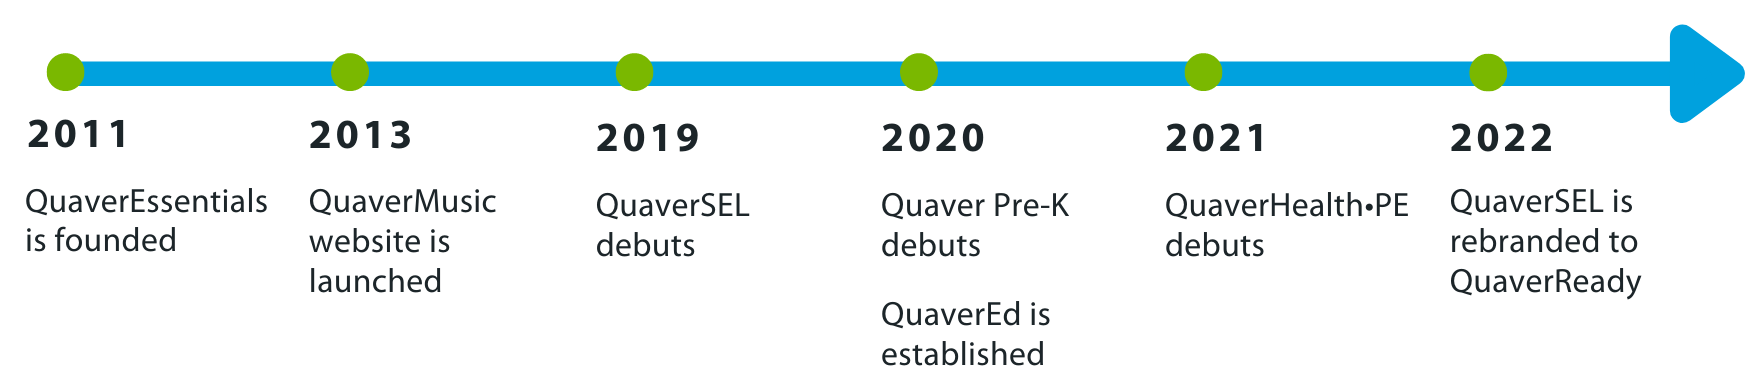 2011 - Quaver Essentials is founded. 2013 - Quaver Music website is launched. 2019 - Quaver SEL debuts. 2020 - Quaver Pre-K debuts. Quaver Ed is established. 2021 - Quaver Health PE debuts. 2022 Quaver SEL is rebranded to Quaver Ready.